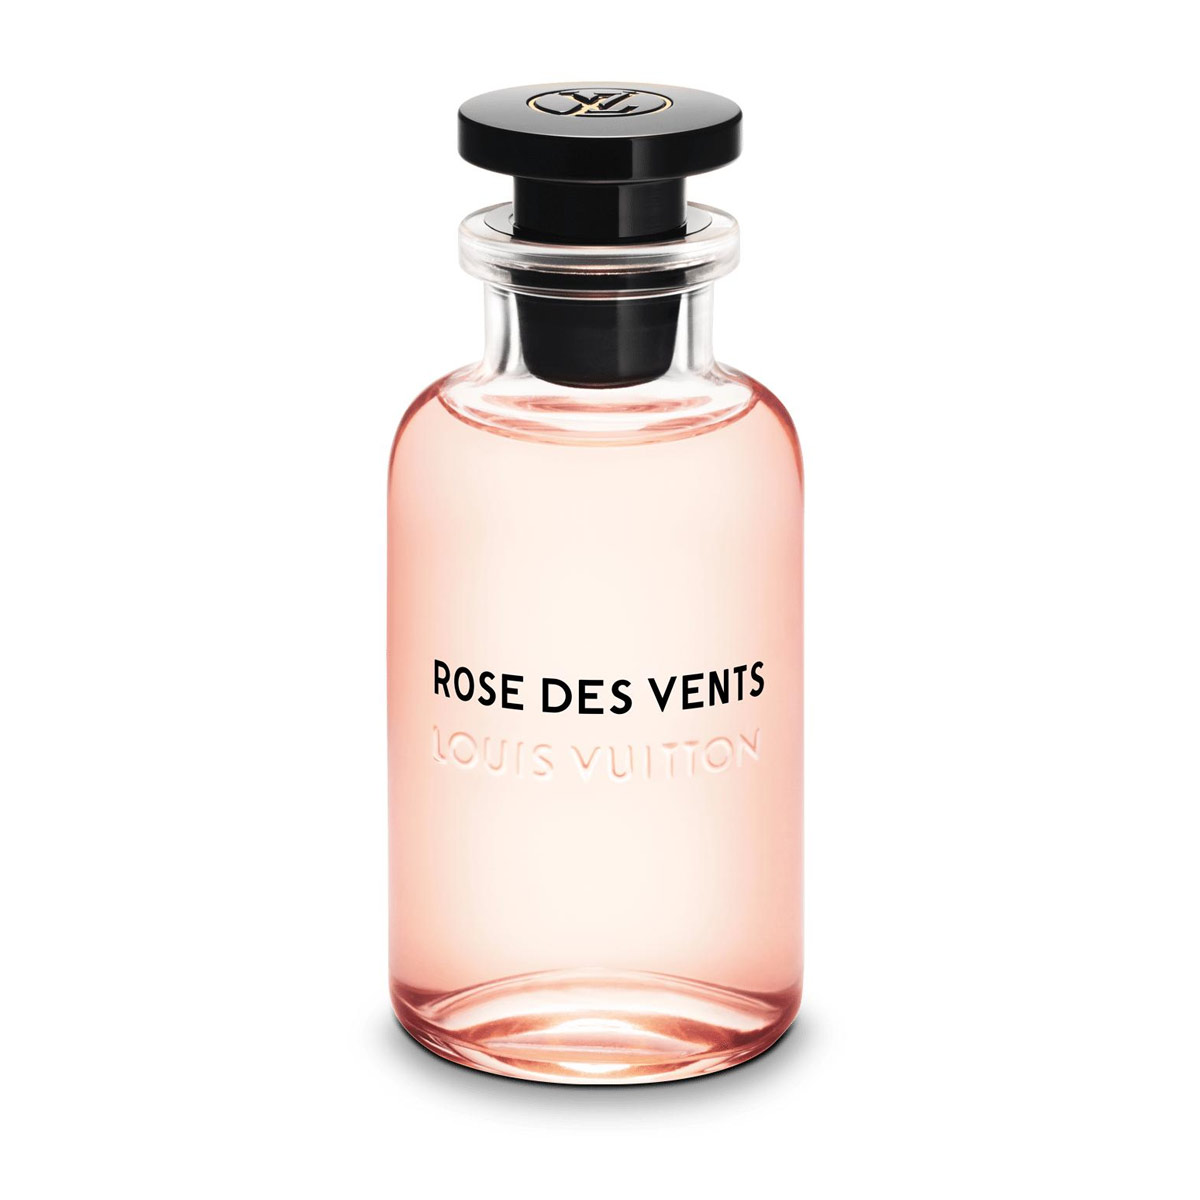 Nước Hoa Louis Vuitton Rose des Vents EDP Ướp Hương Hoa Hồng